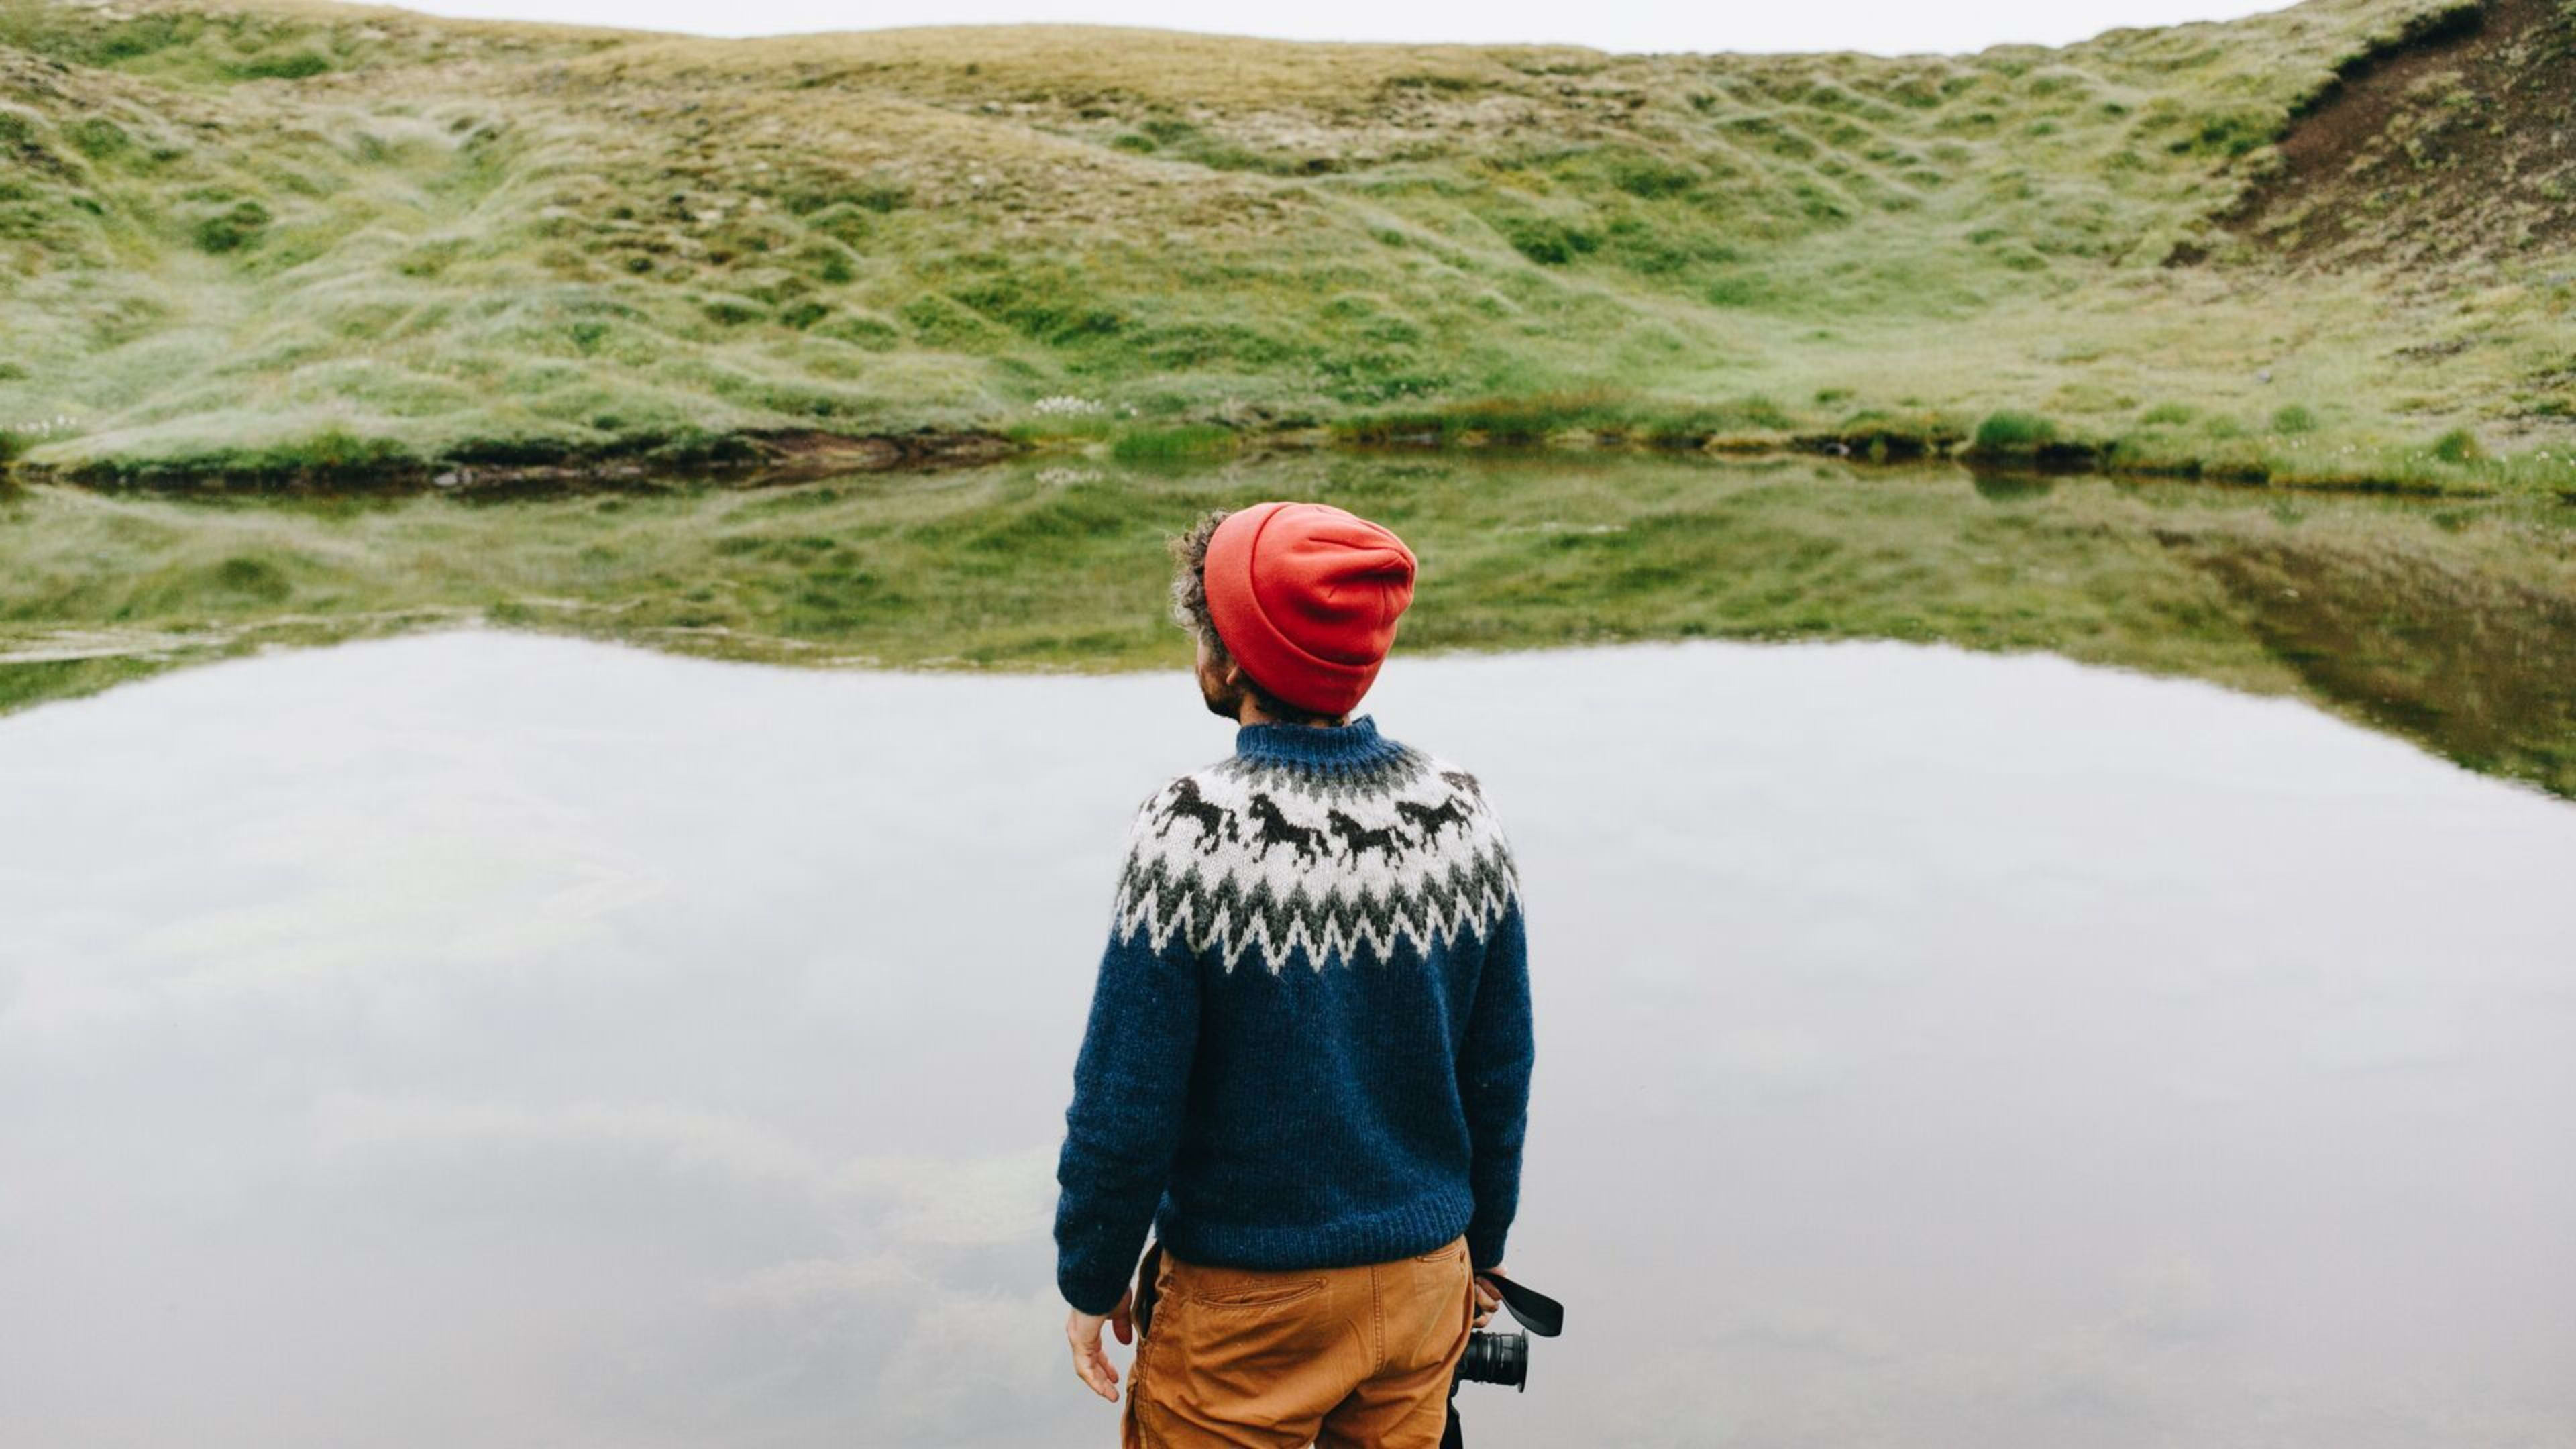 Icelandic sweater lopapeysa